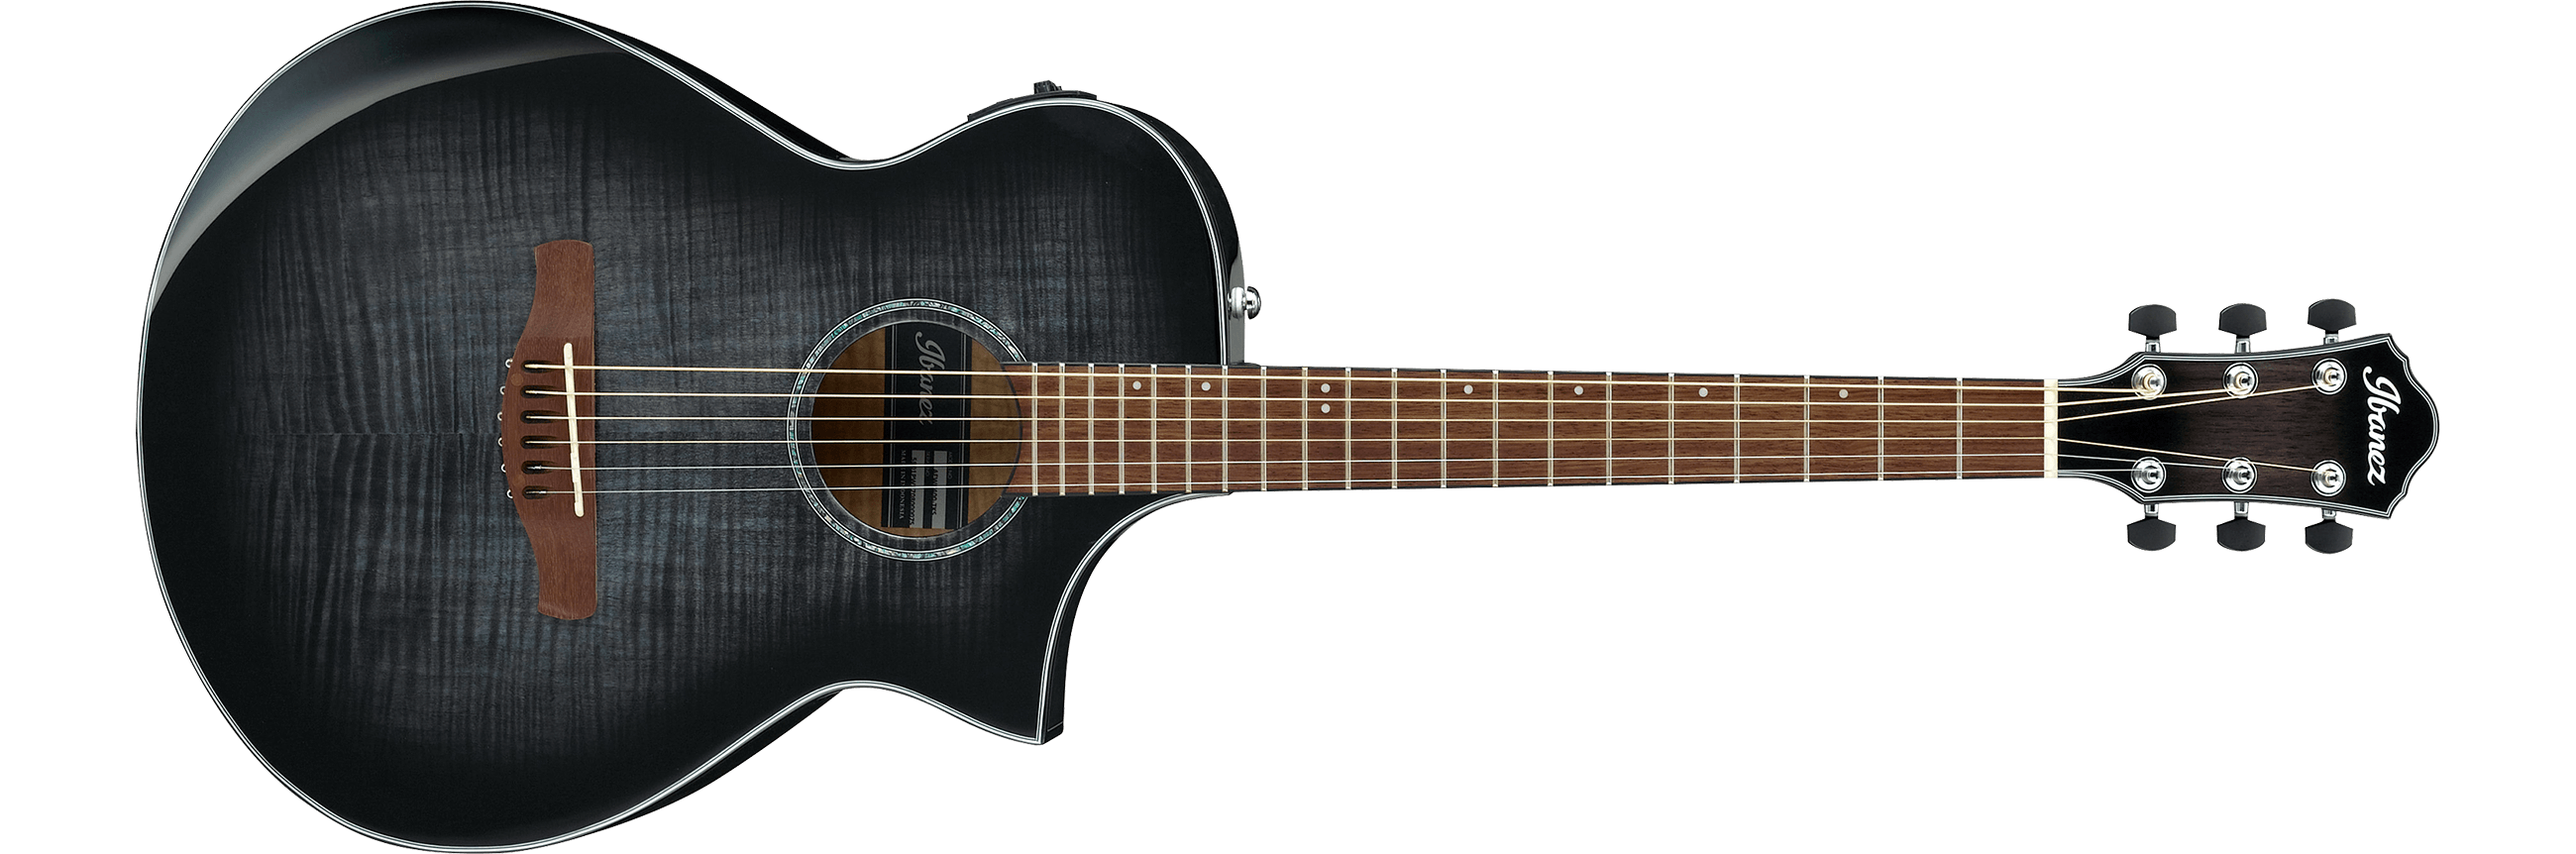 Ibanez AEWC400TKS Right Hand Acoustic/Electric Guitar-Transparent Black Sunburst